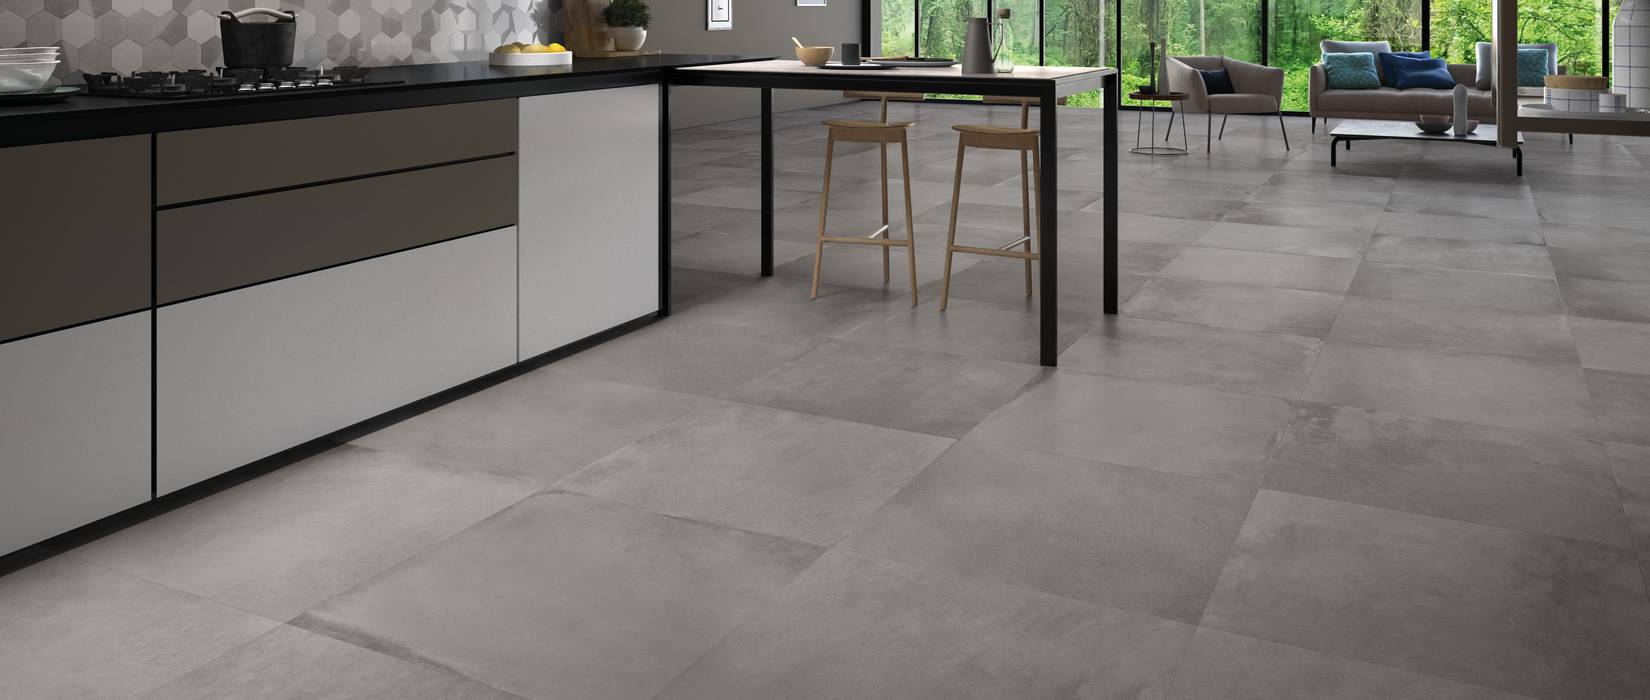 Large size stoneware floor tiles